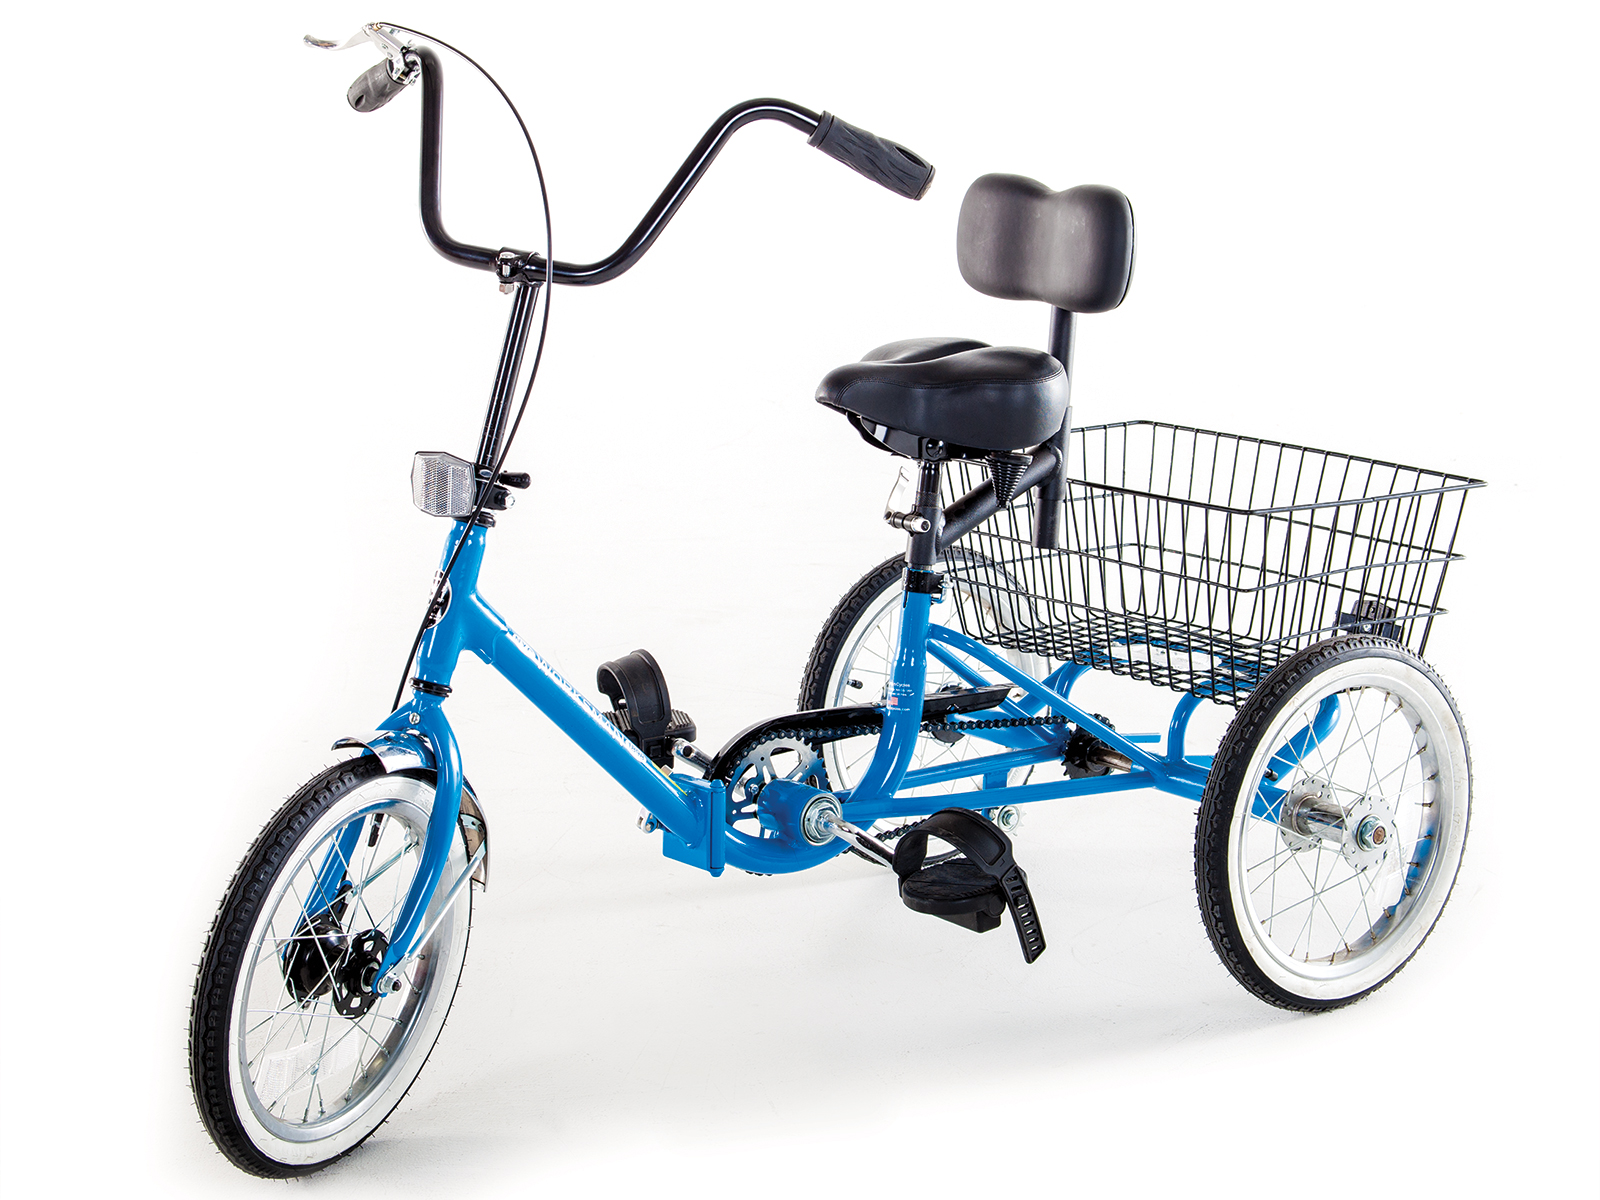 children's 3 wheel cycle